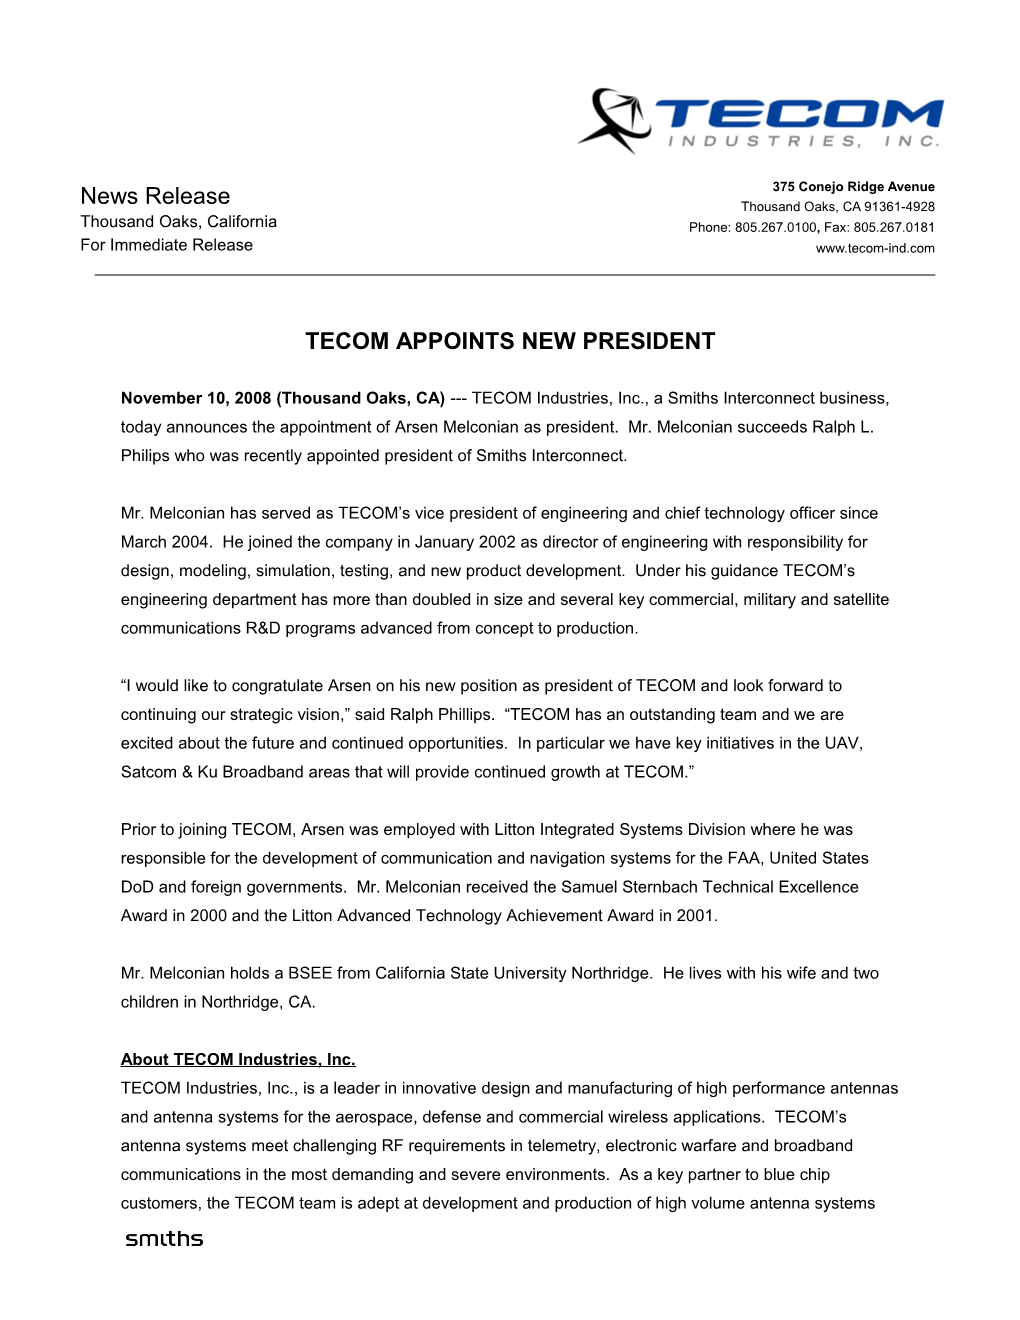 Tecom Appoints New President